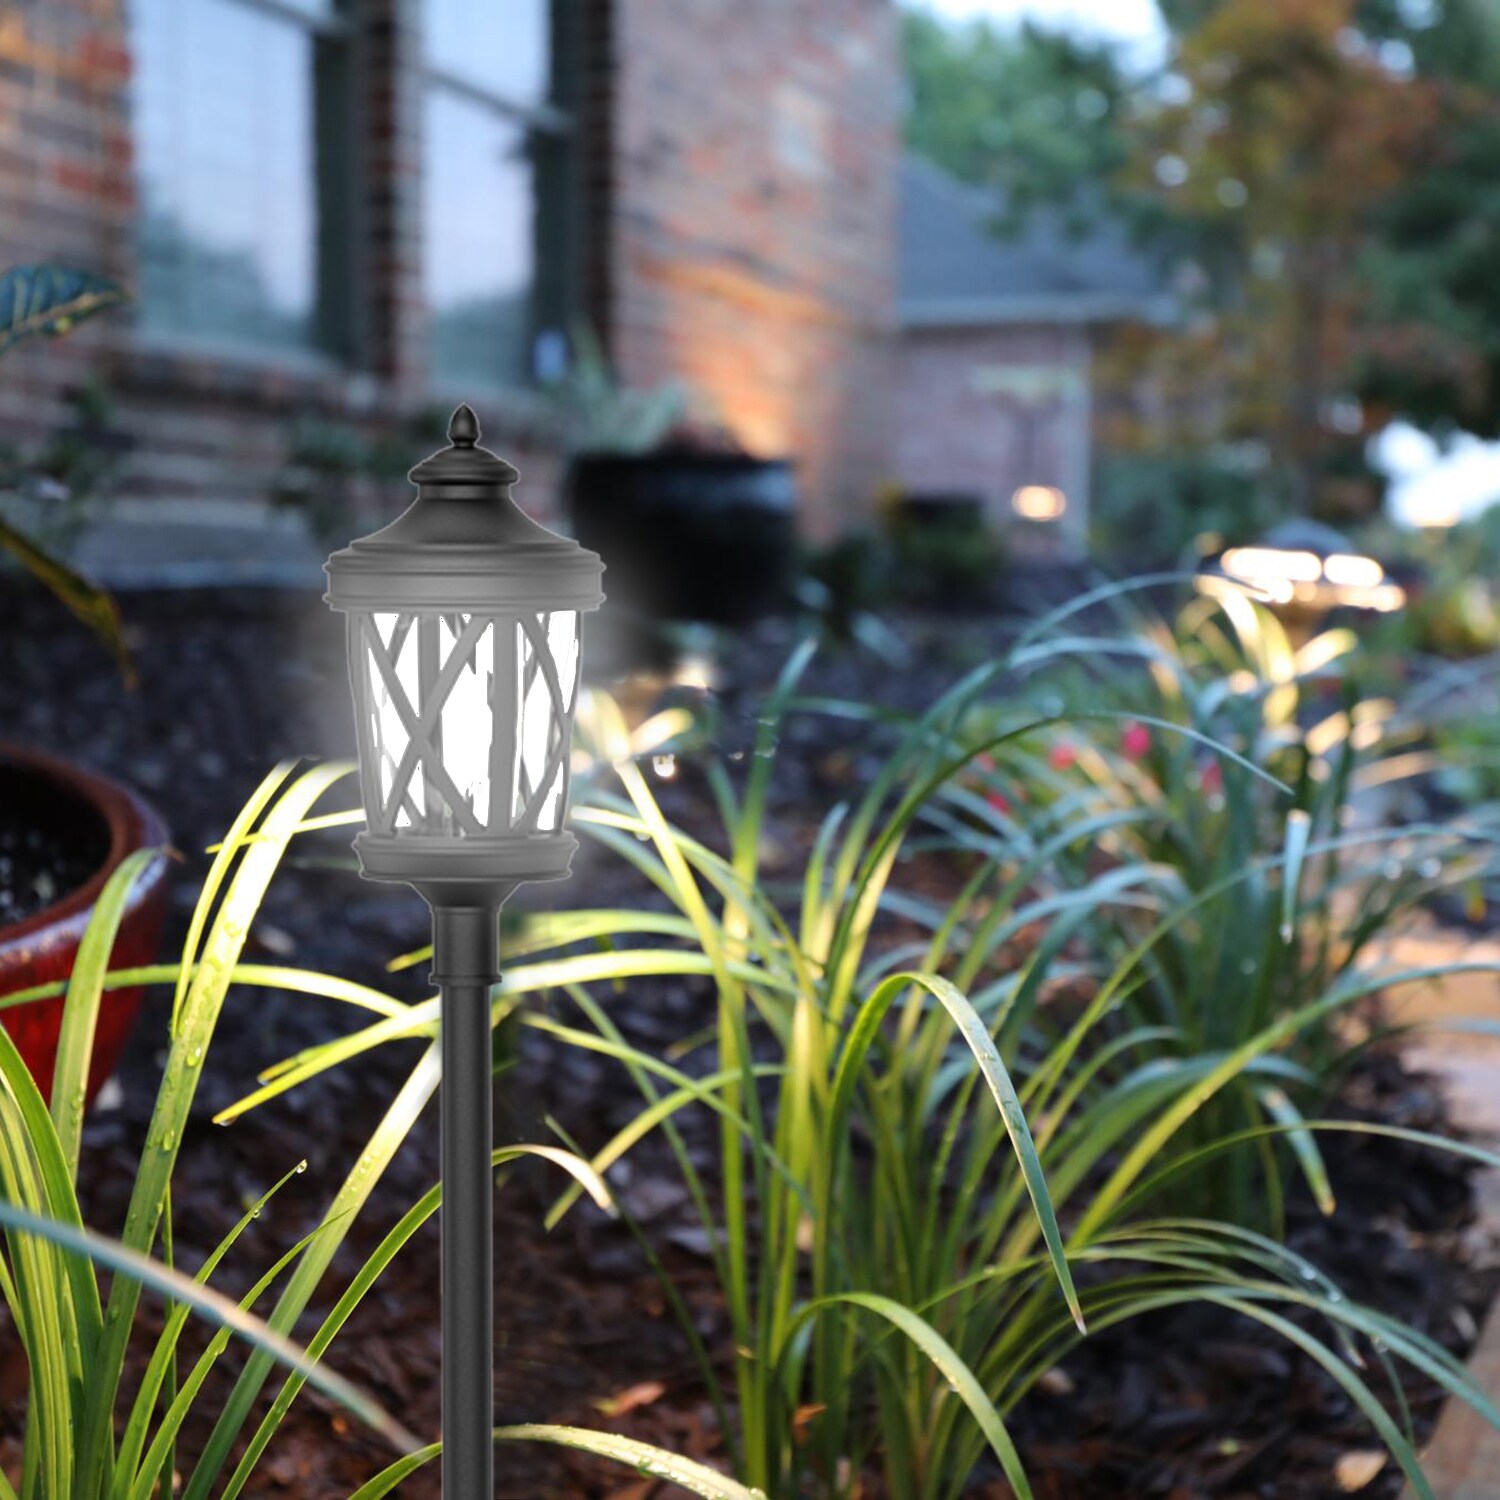 2X 100W LED Flood Light Warm White Super Bright Garden Workshop Outdoor Lighting 